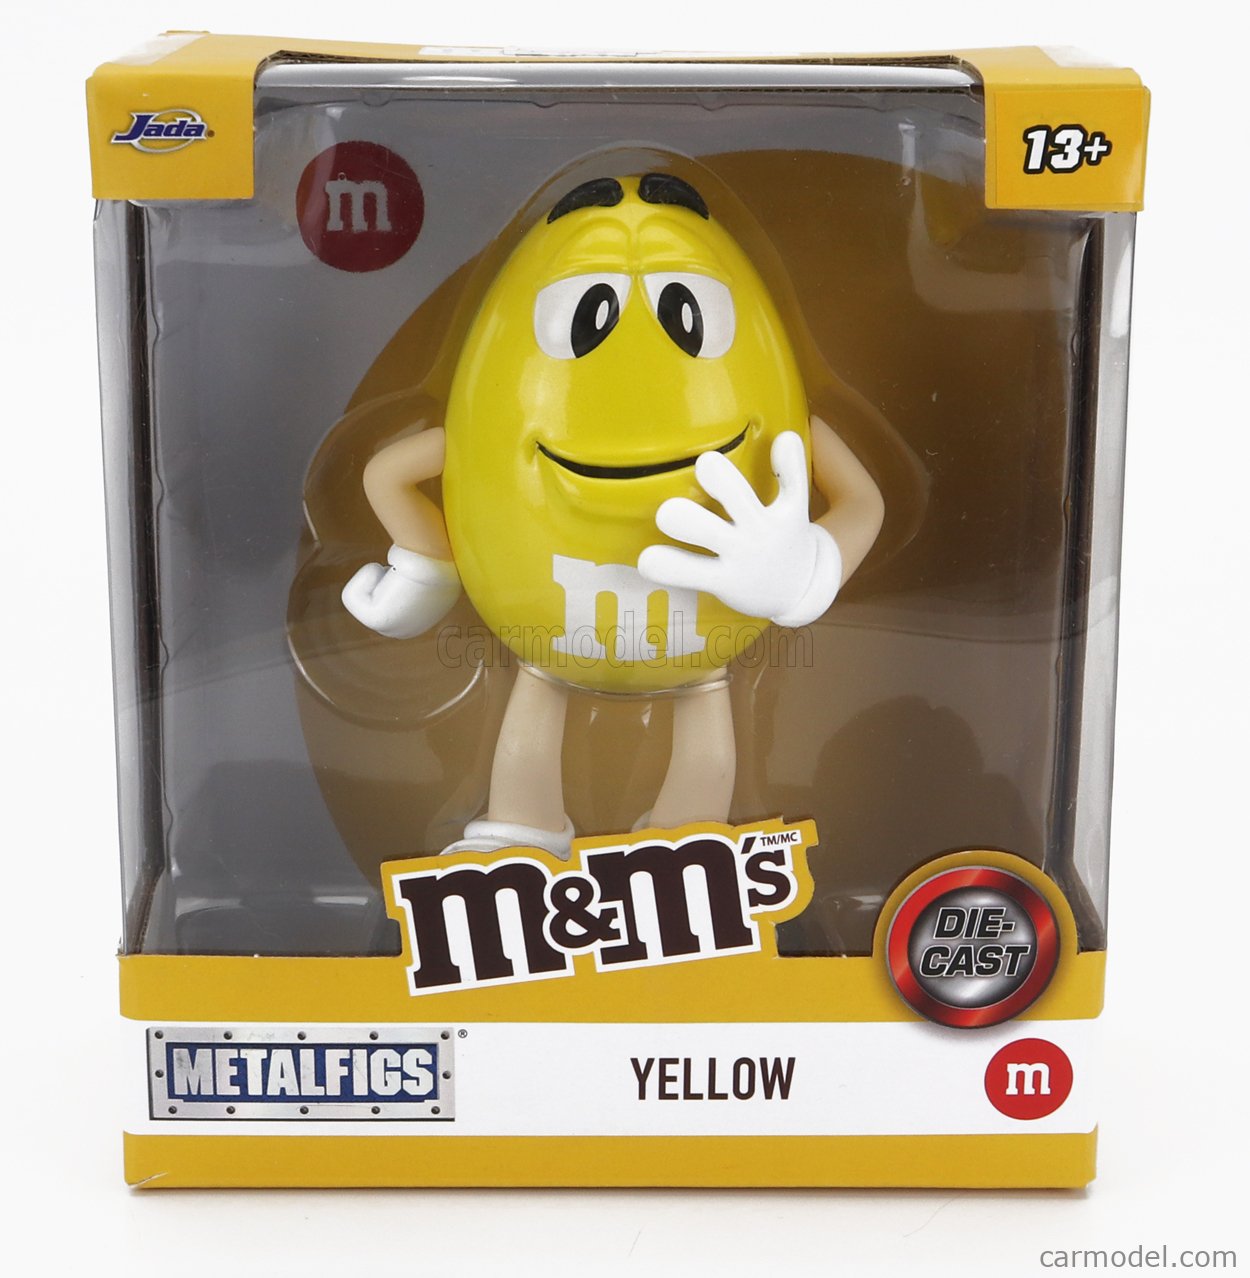 Yellow M&M's 5.25 Diecast Figurine Metalfigs Series by Jada